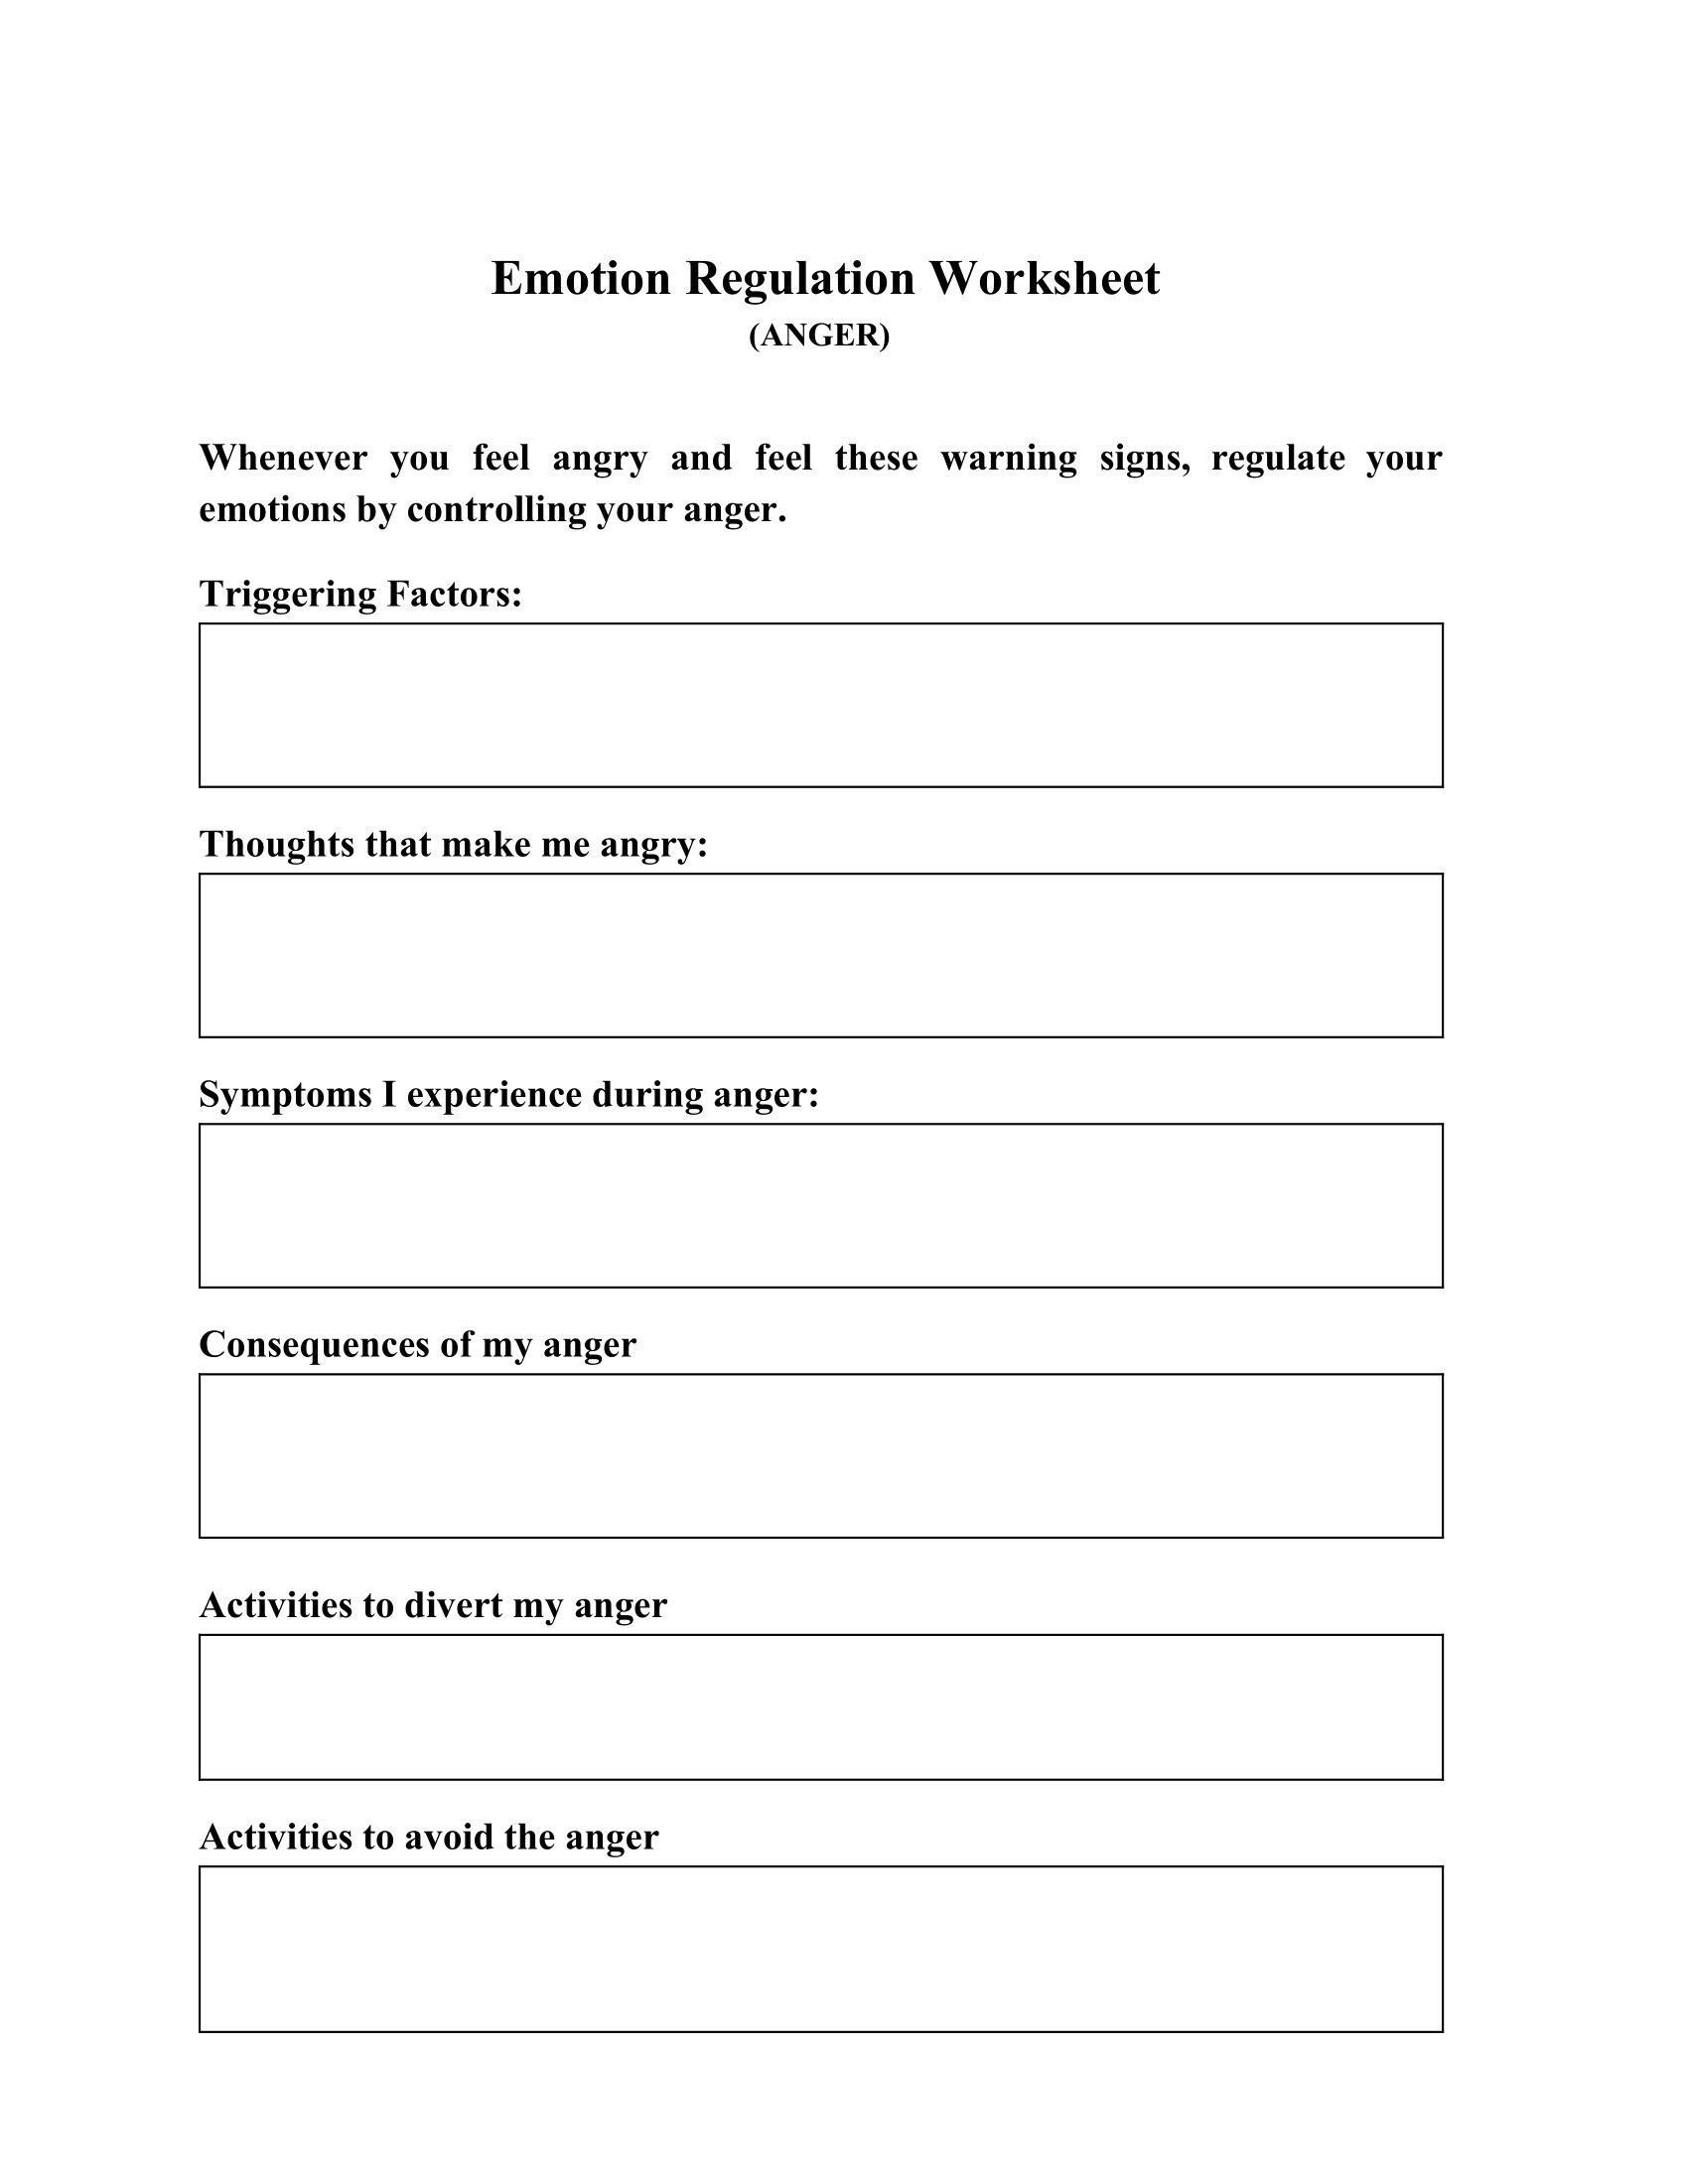 Free Printable Emotional Regulation Worksheets For Youth Pdf